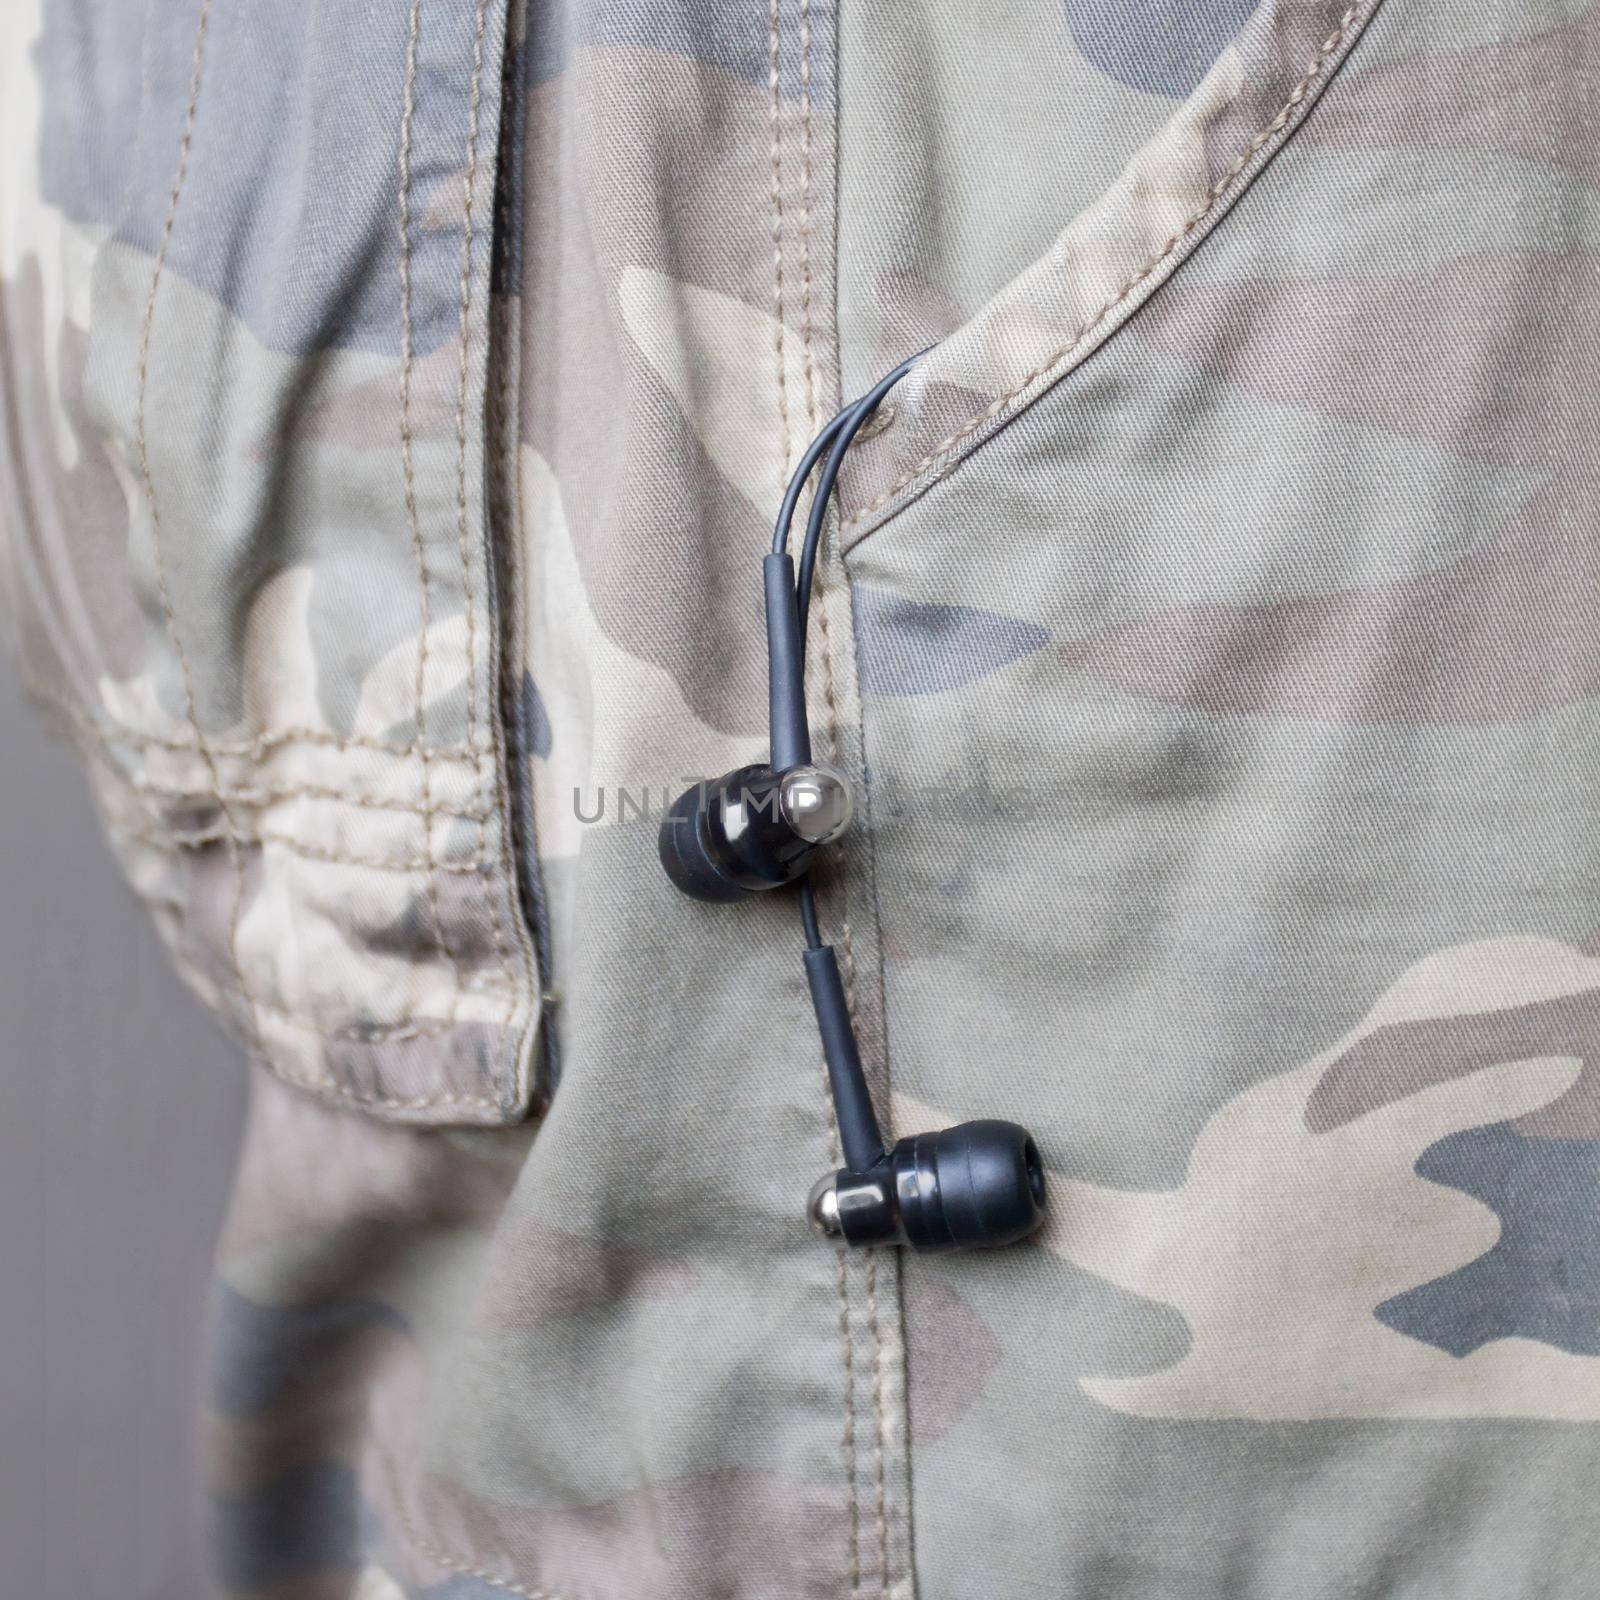 Headphones hanging off a pocket military pants